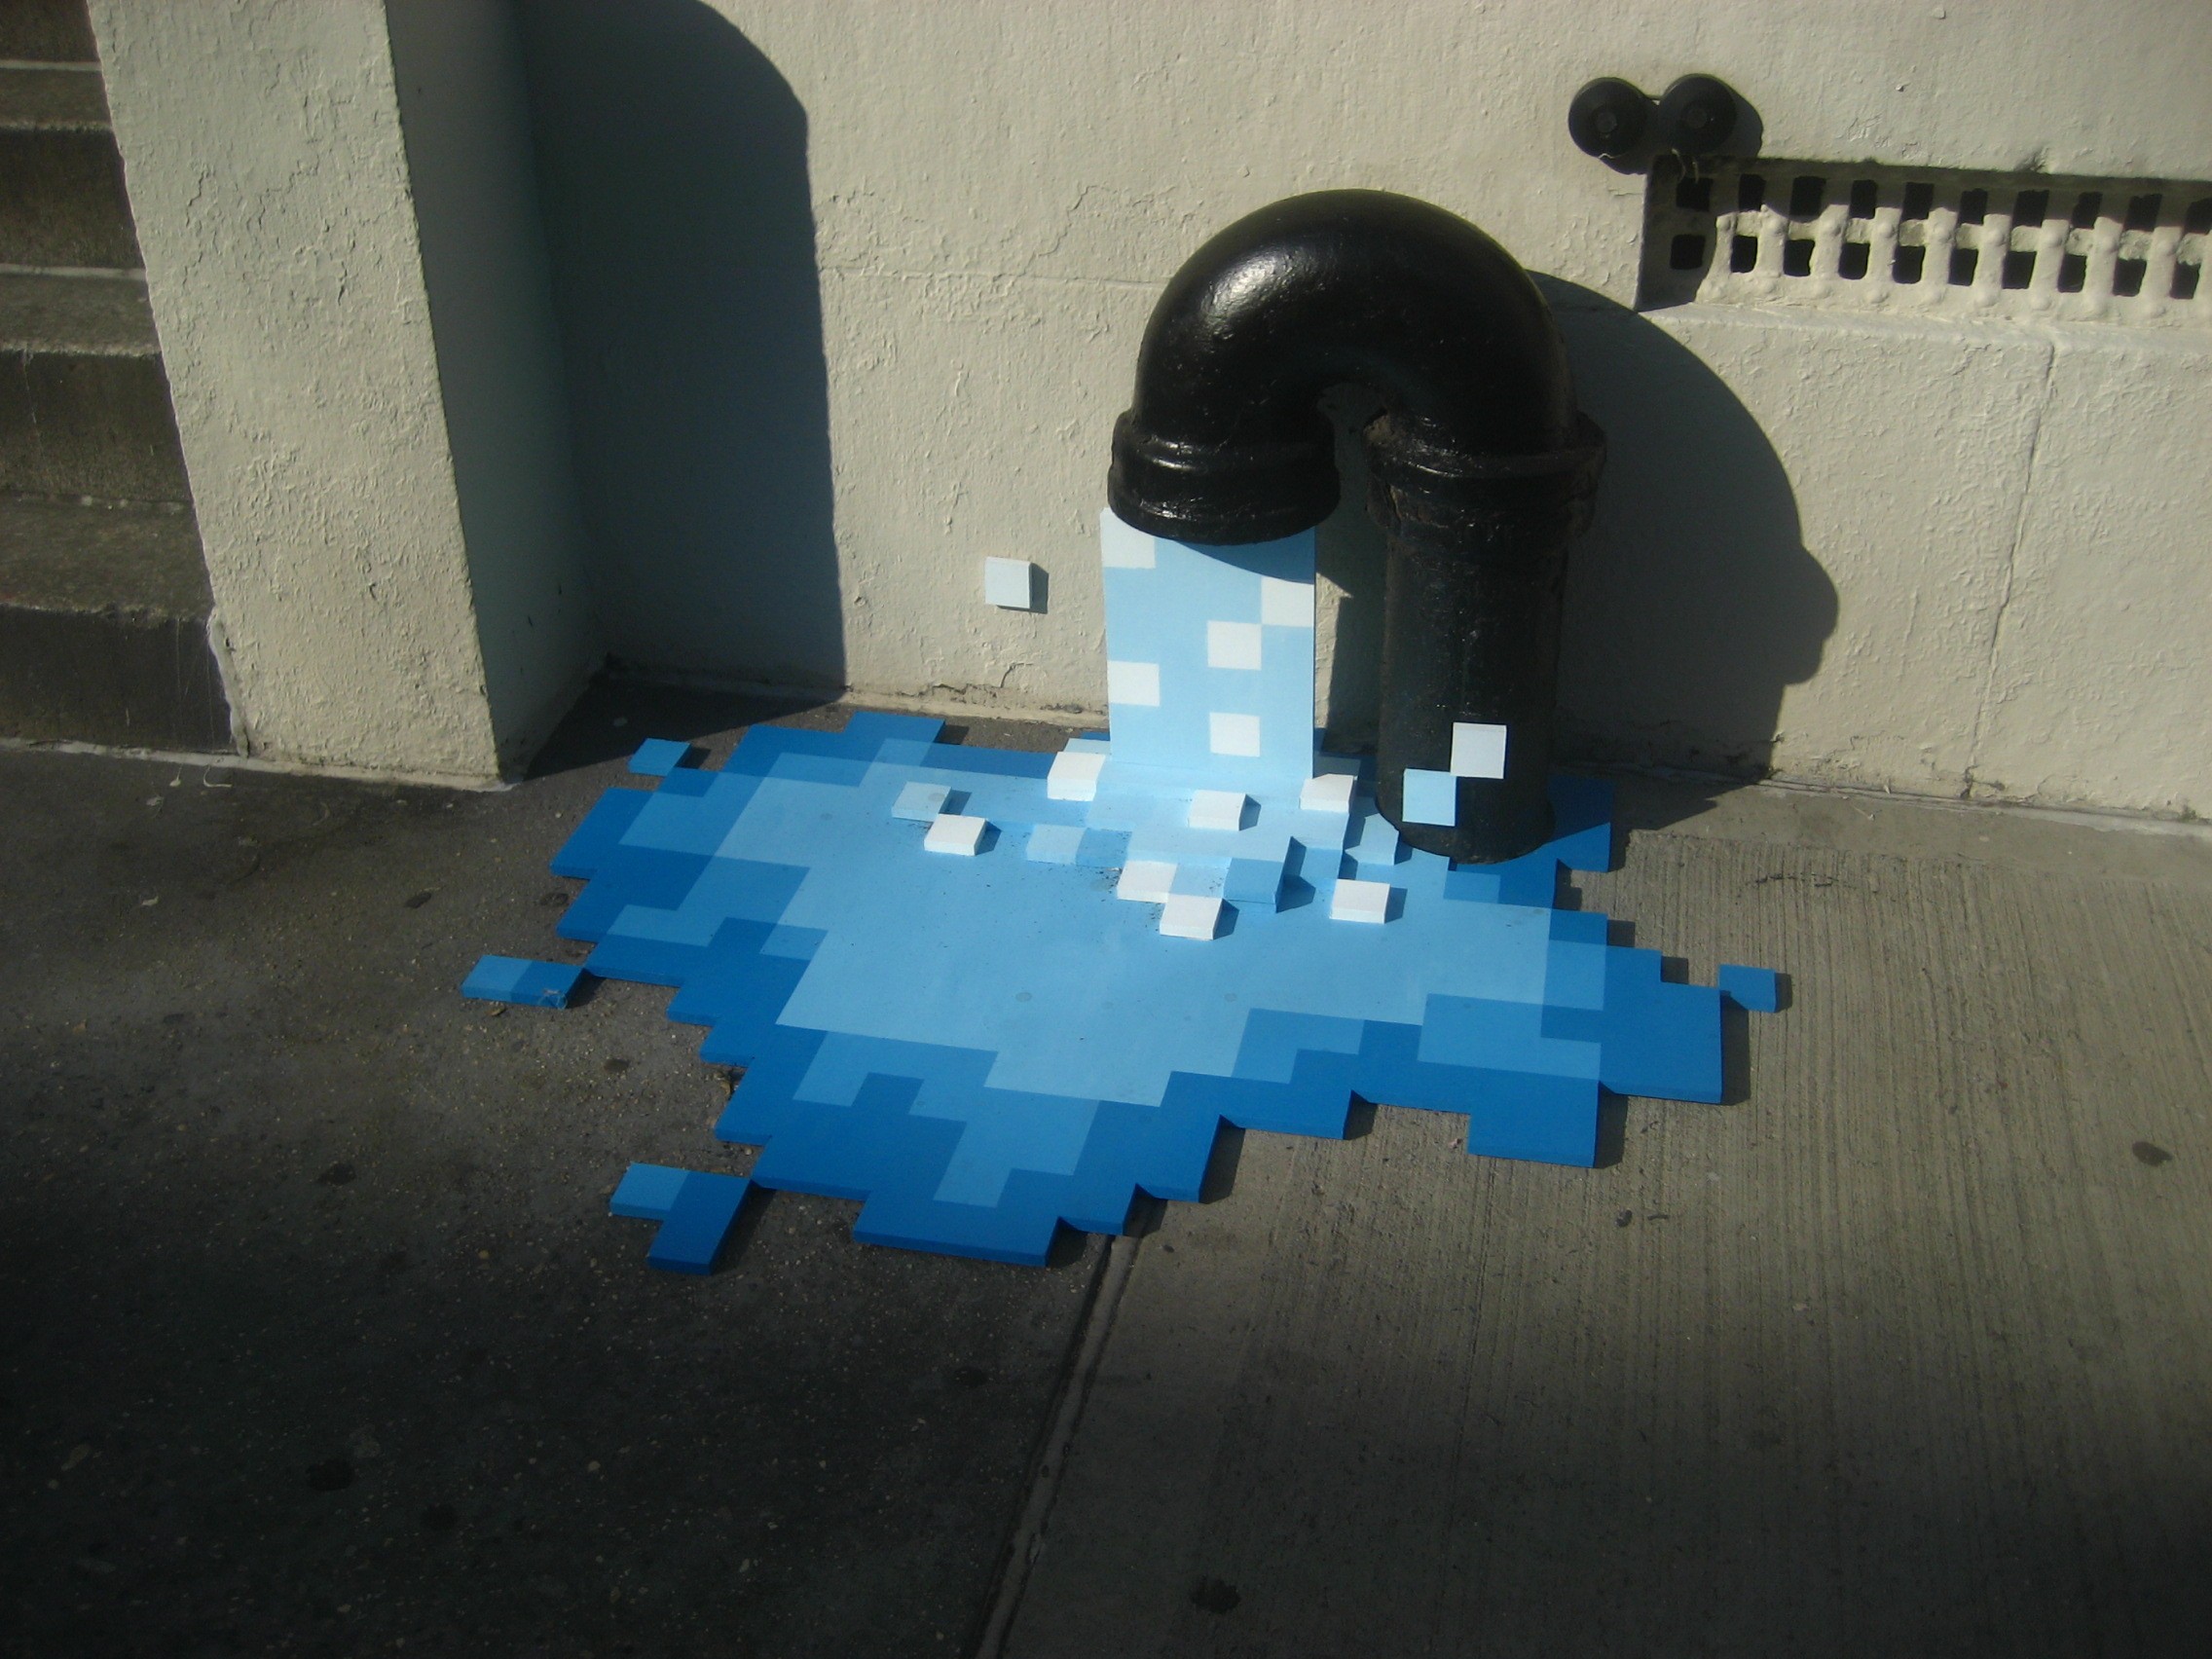 General 2272x1704 pixels pixel art street water pipes building artwork street art shadow digital art cyan blue